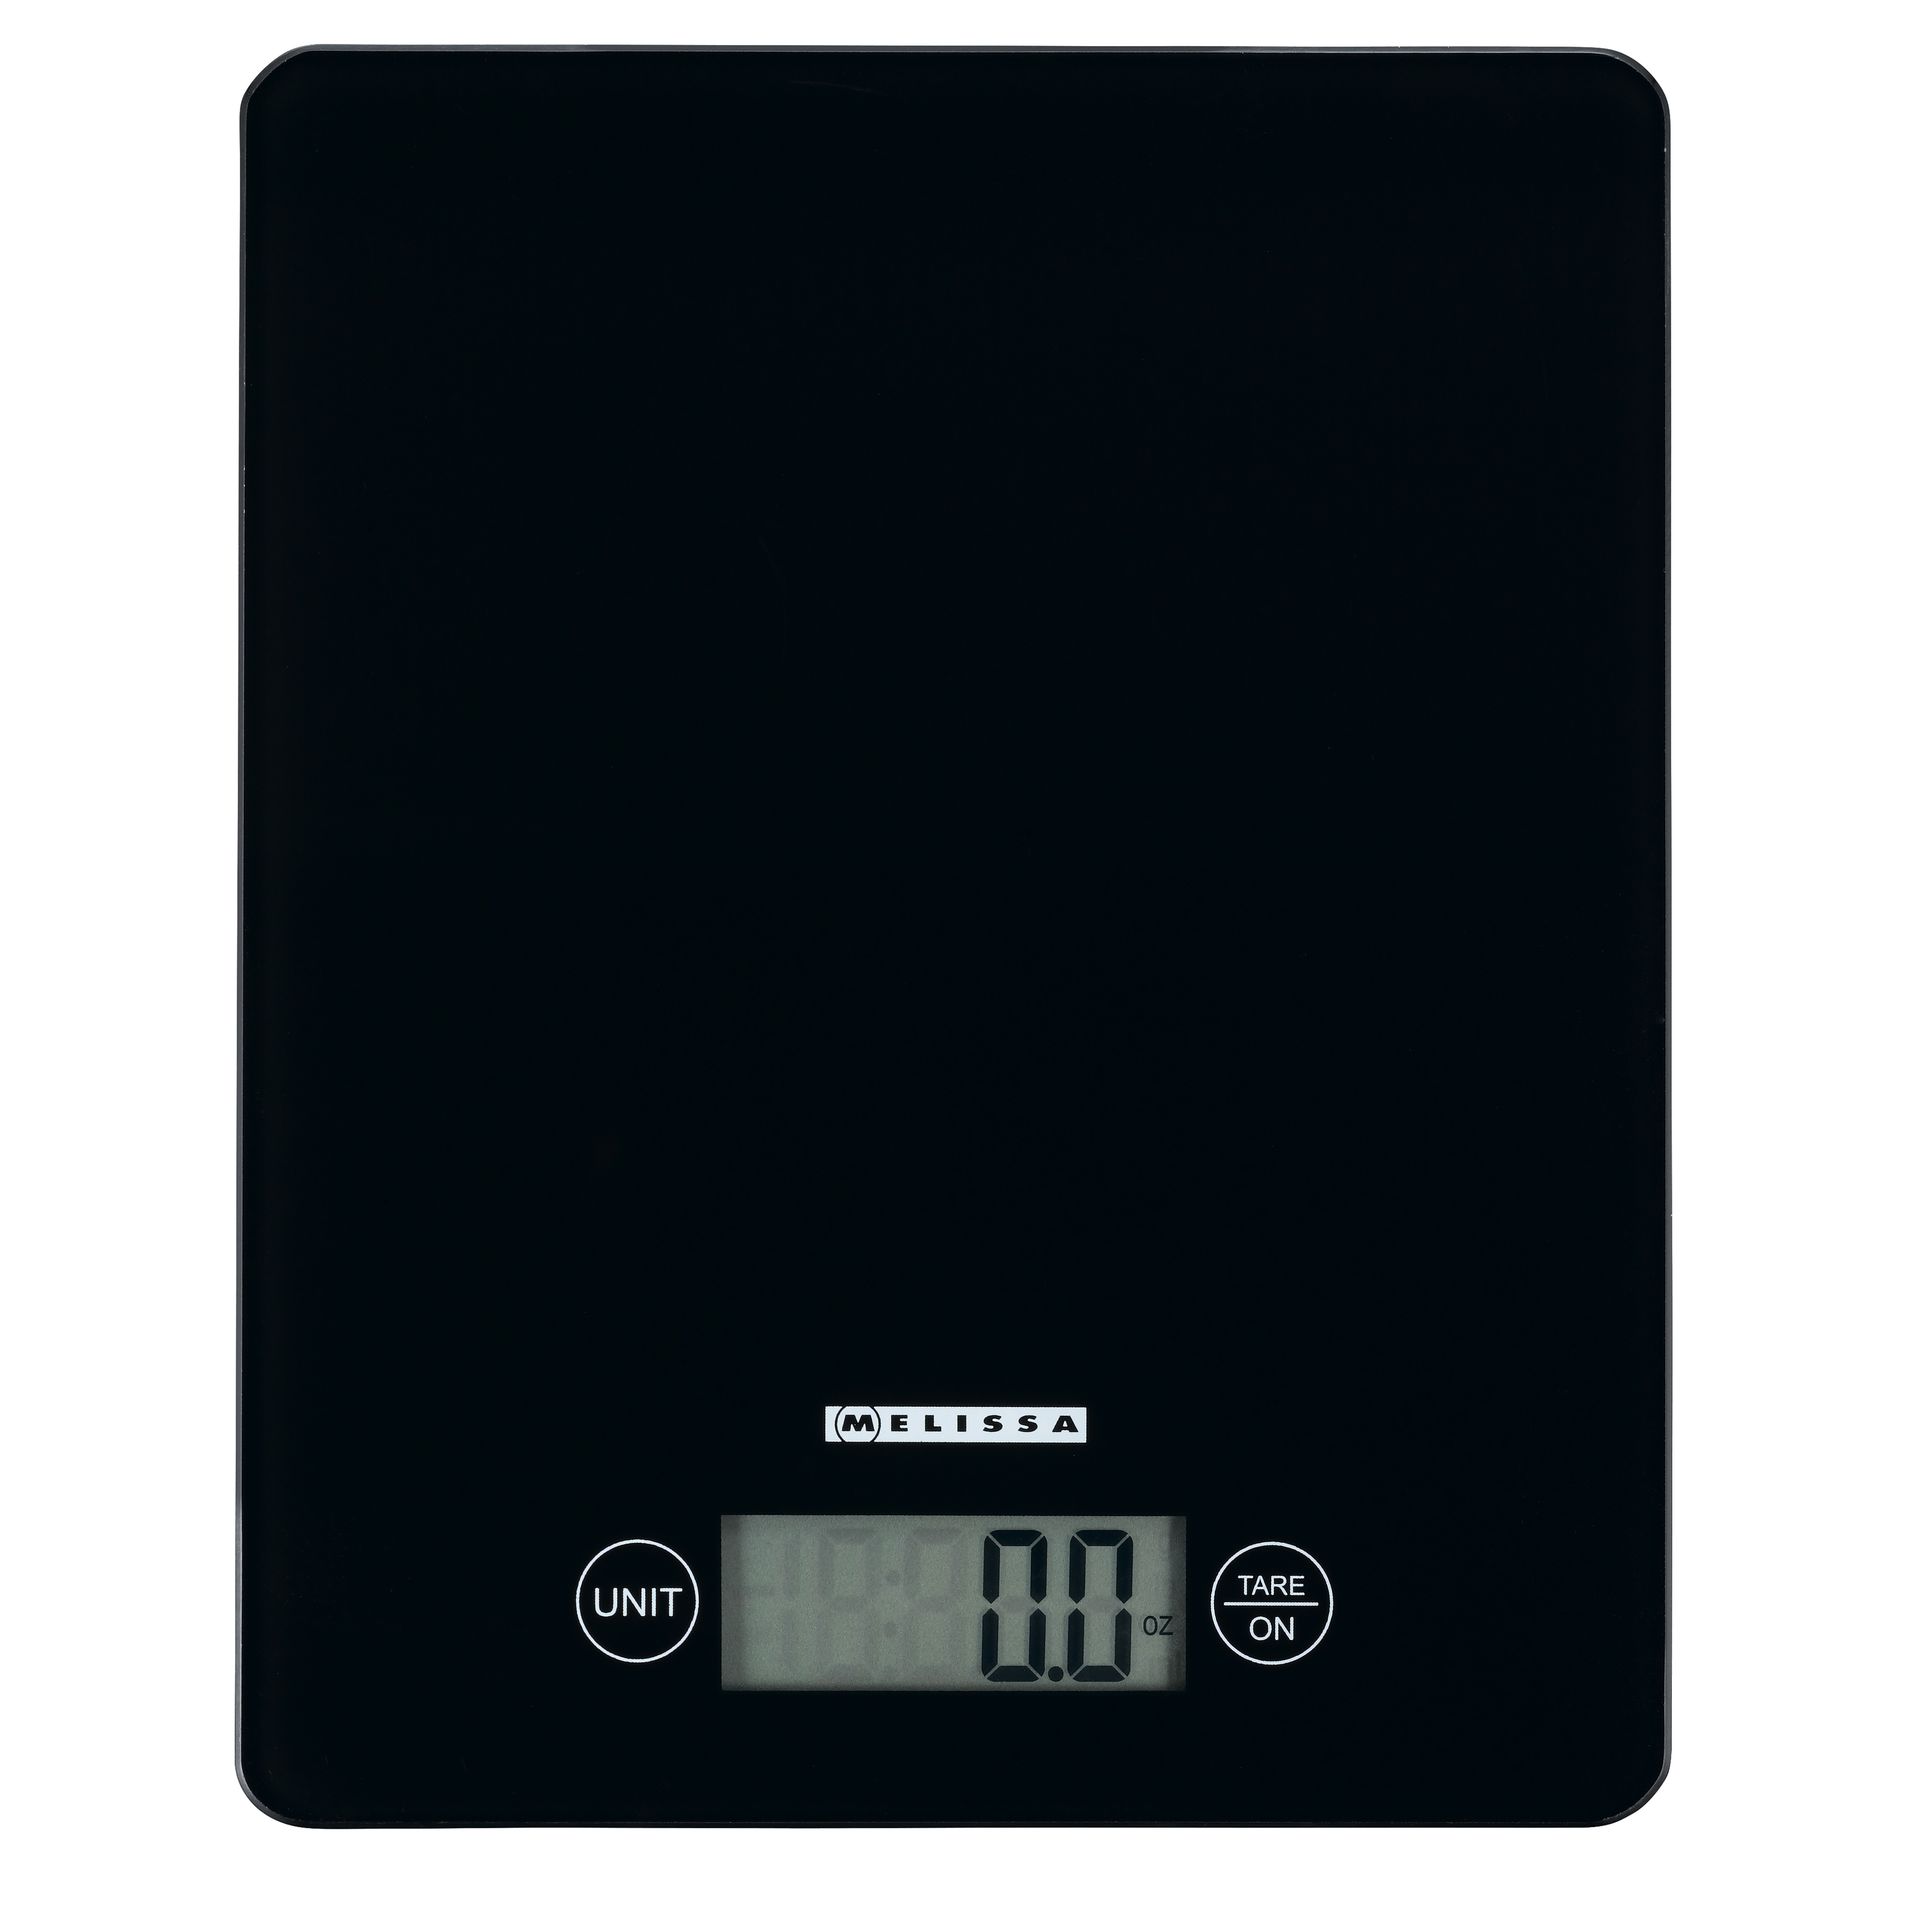 MELISSA Szklana Elektroniczna waga kuchenna do 5kg 16310231